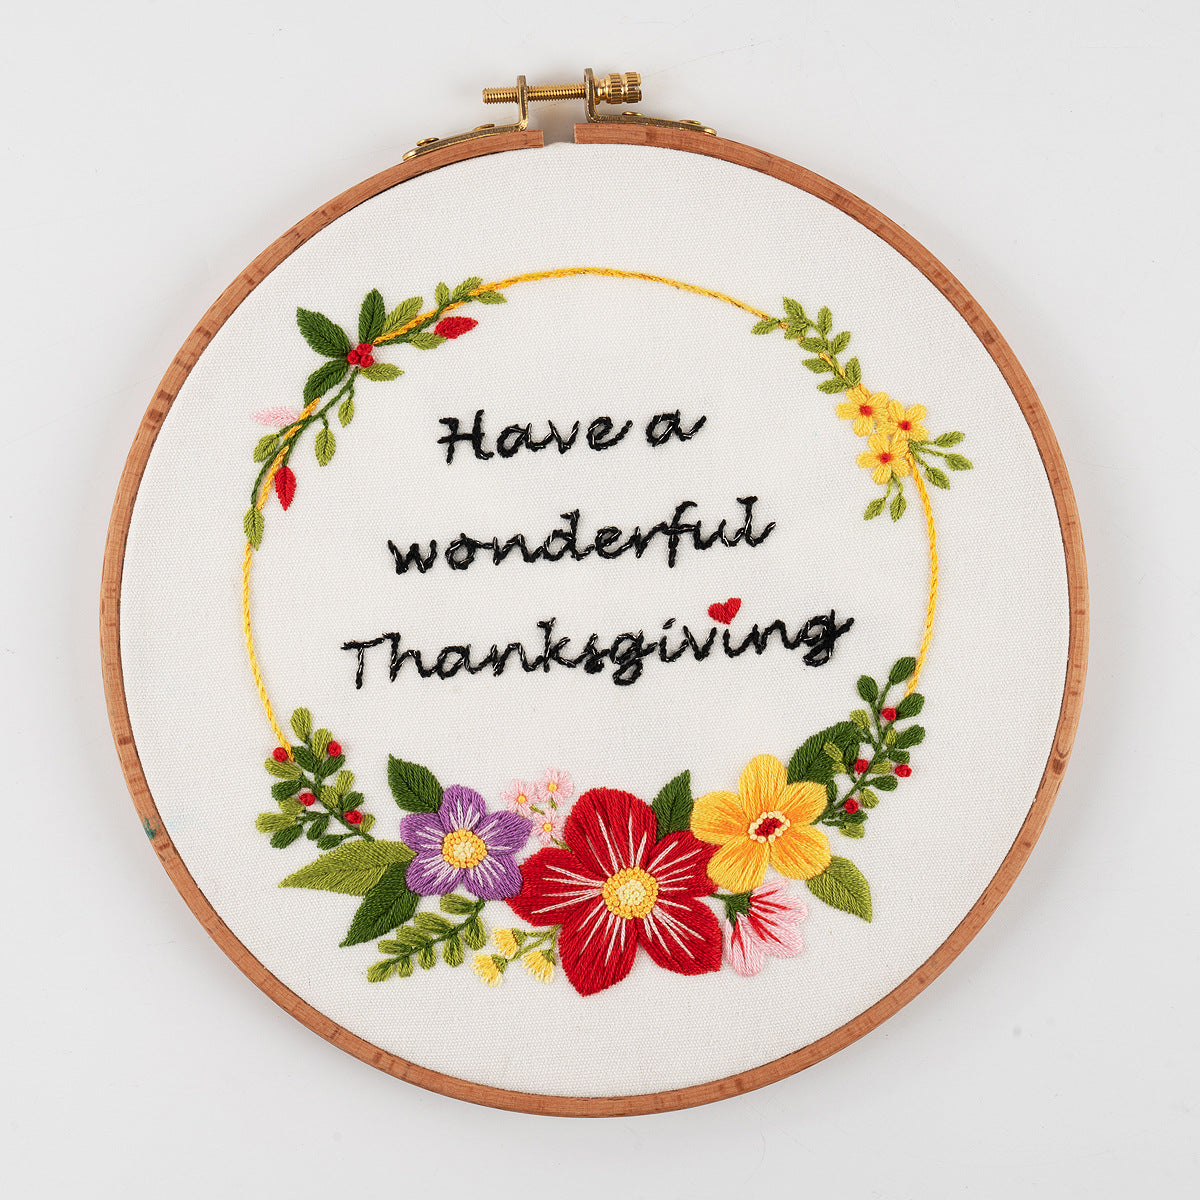 Flower Embroidery Art Kits - 1Pcs